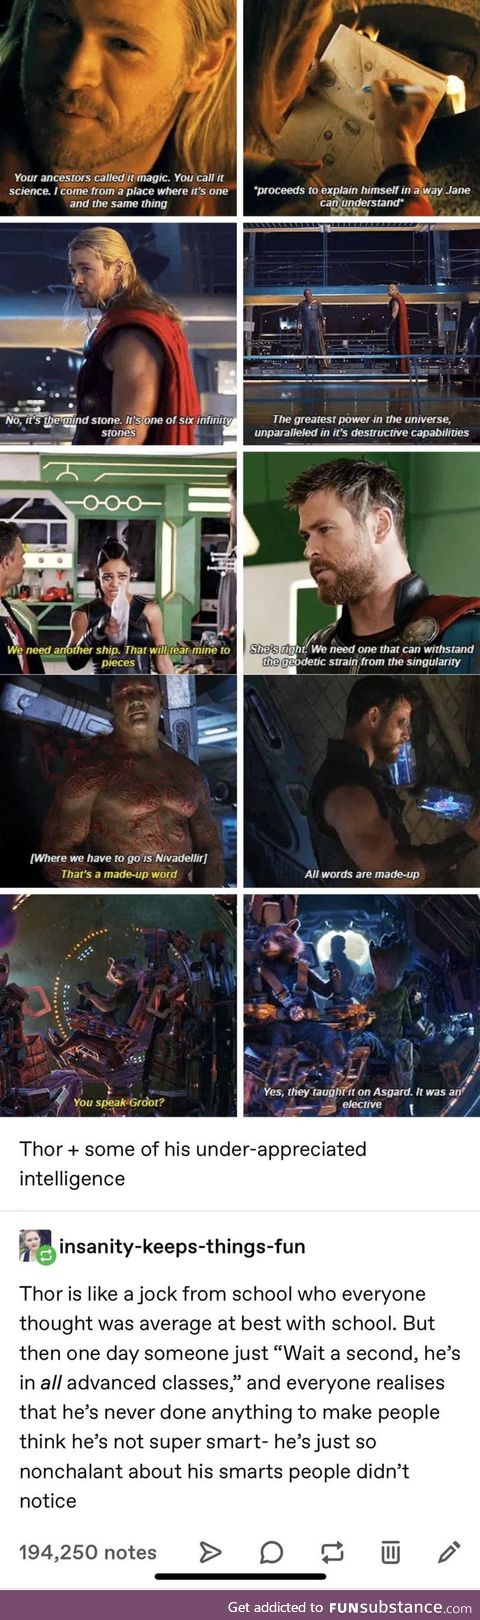 Thor is Smart